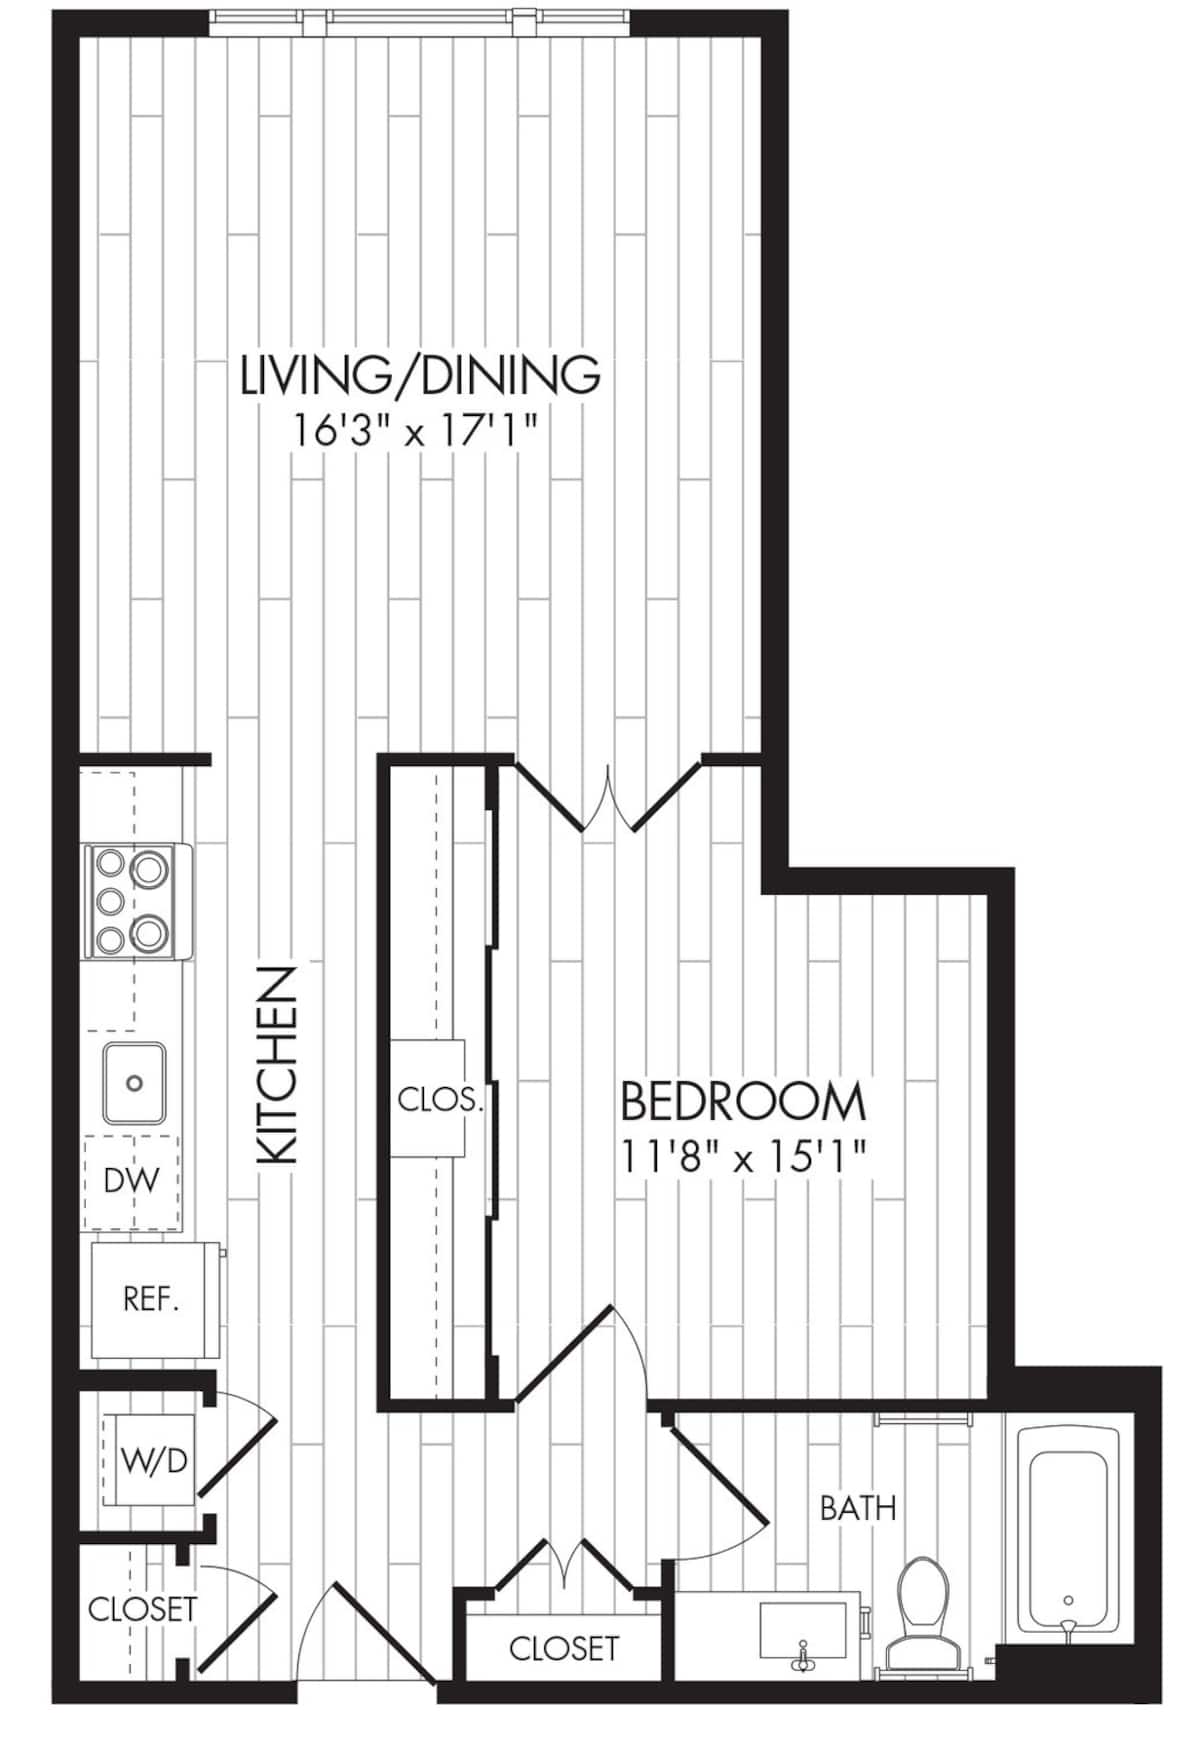 Floorplan diagram for 1F, showing 1 bedroom